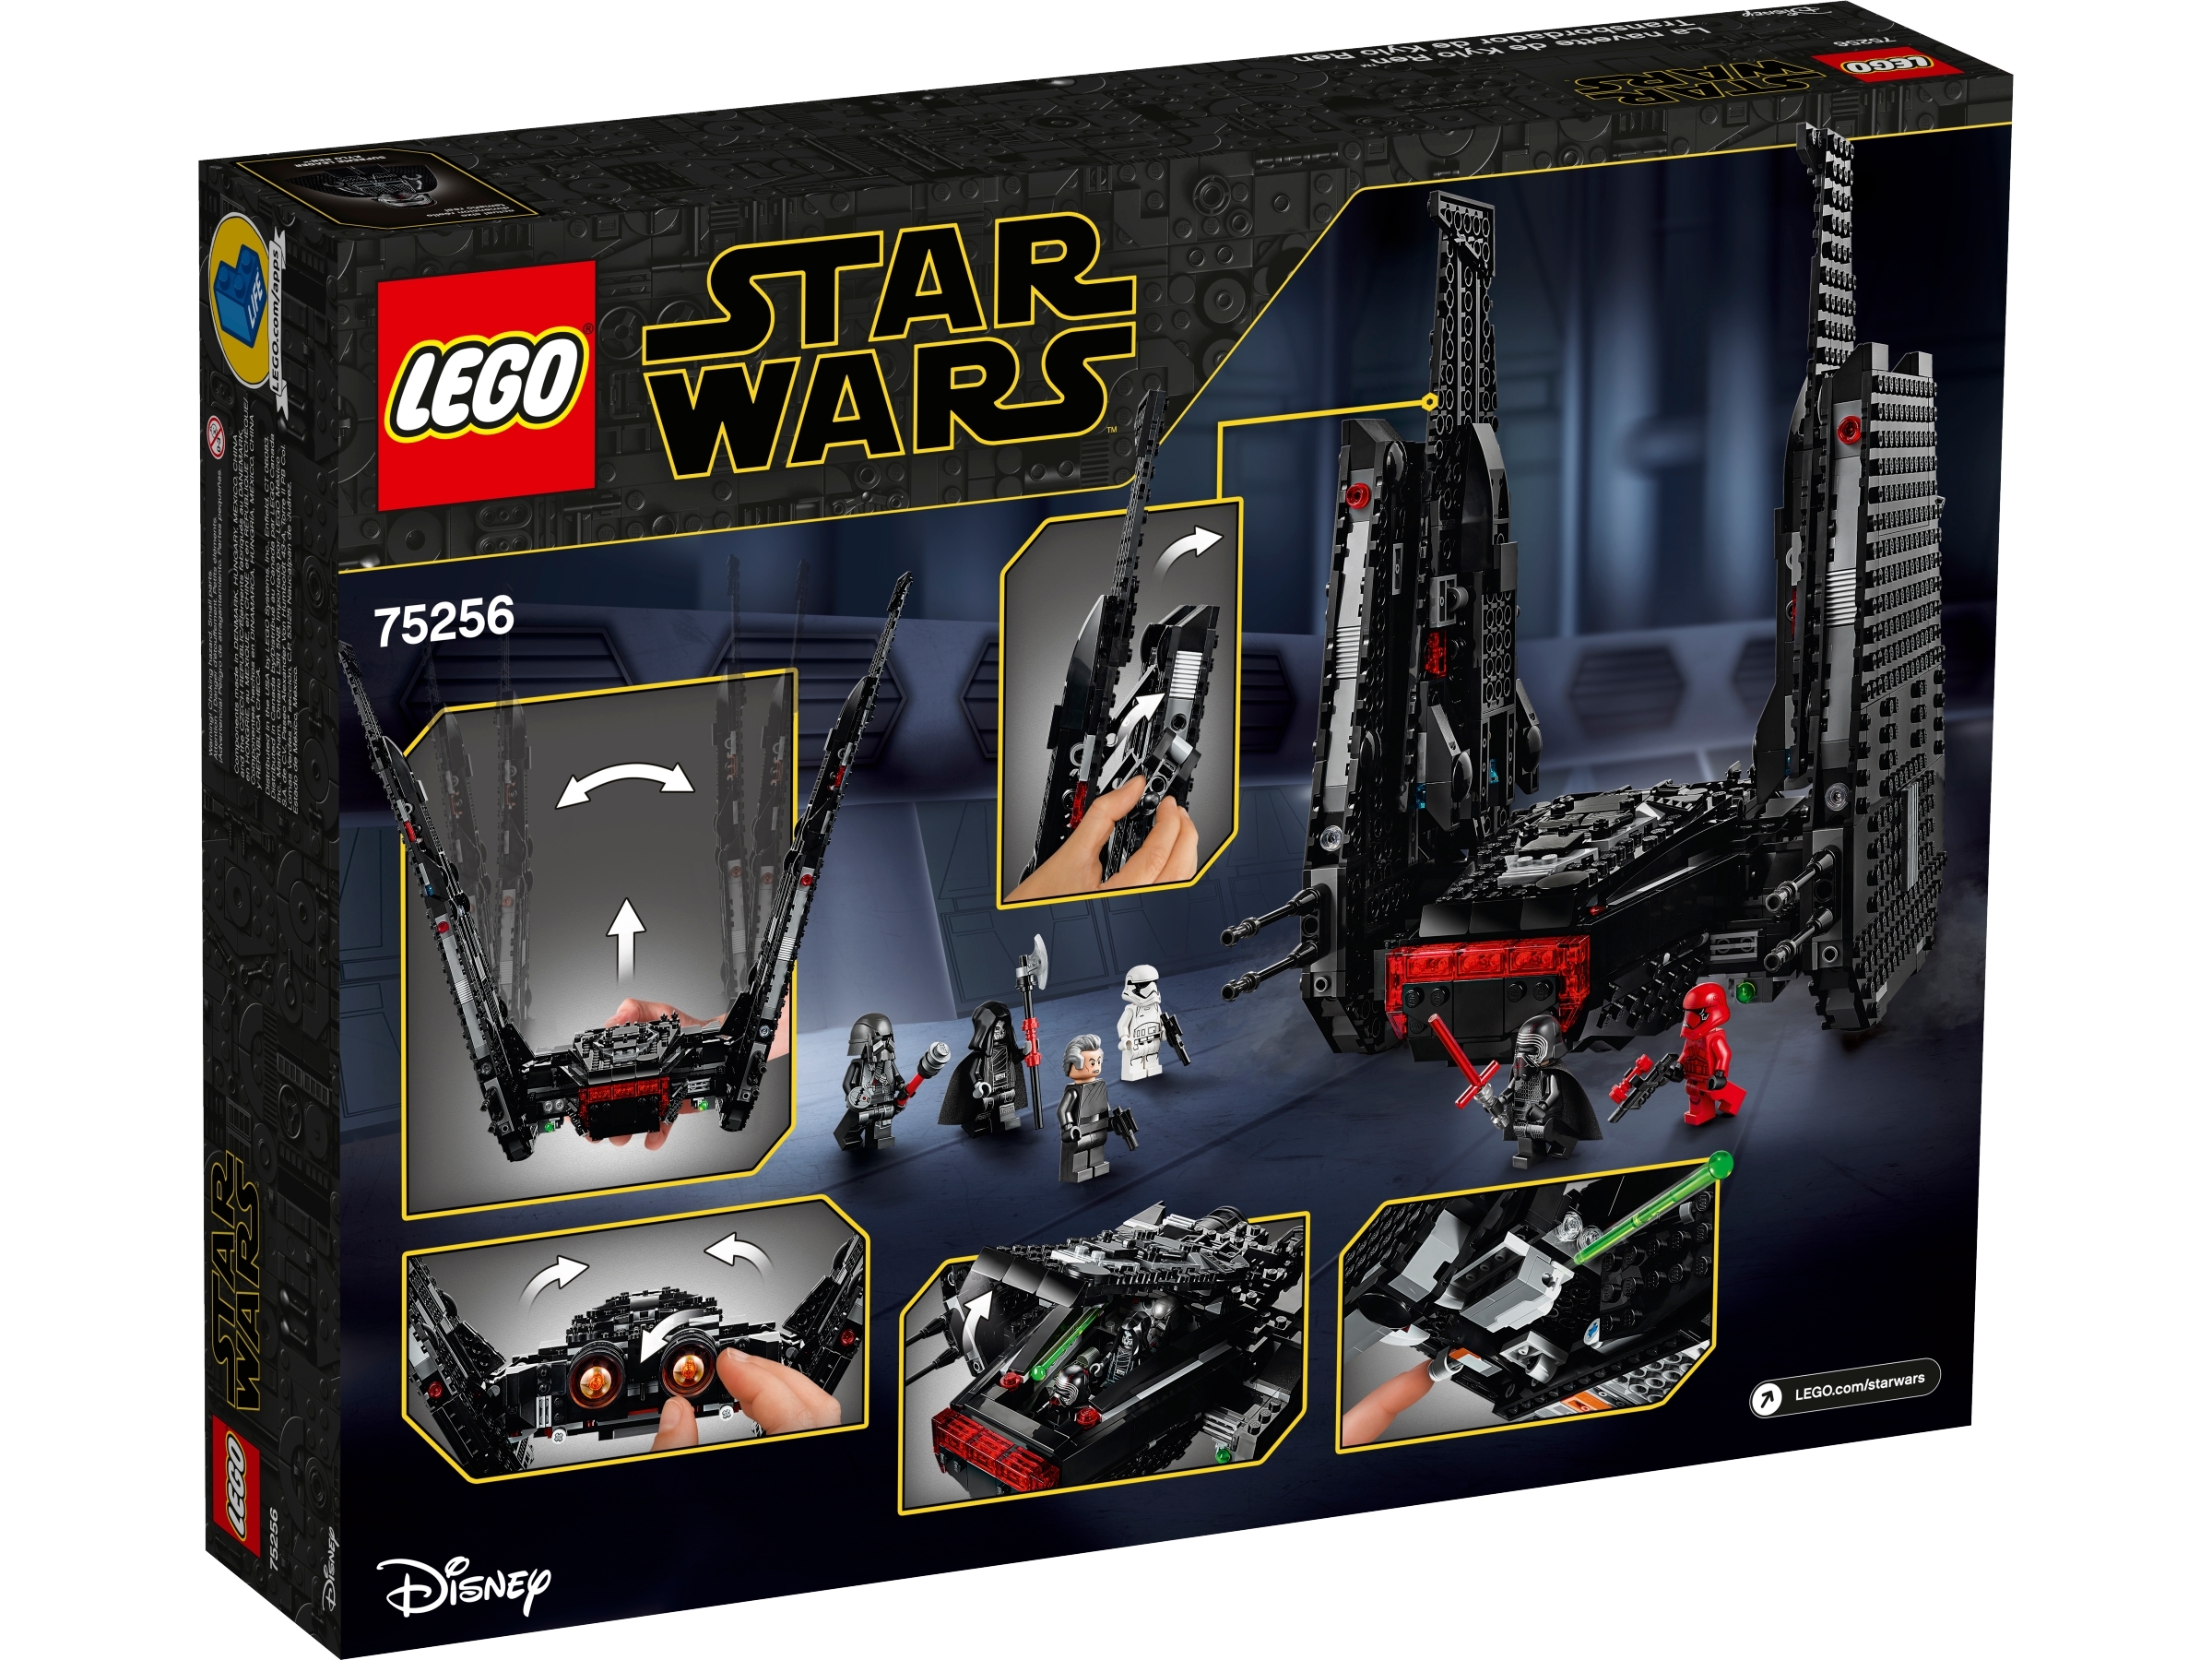 for sale online LEGO Kylo Ren's Shuttle Star Wars TM 75256